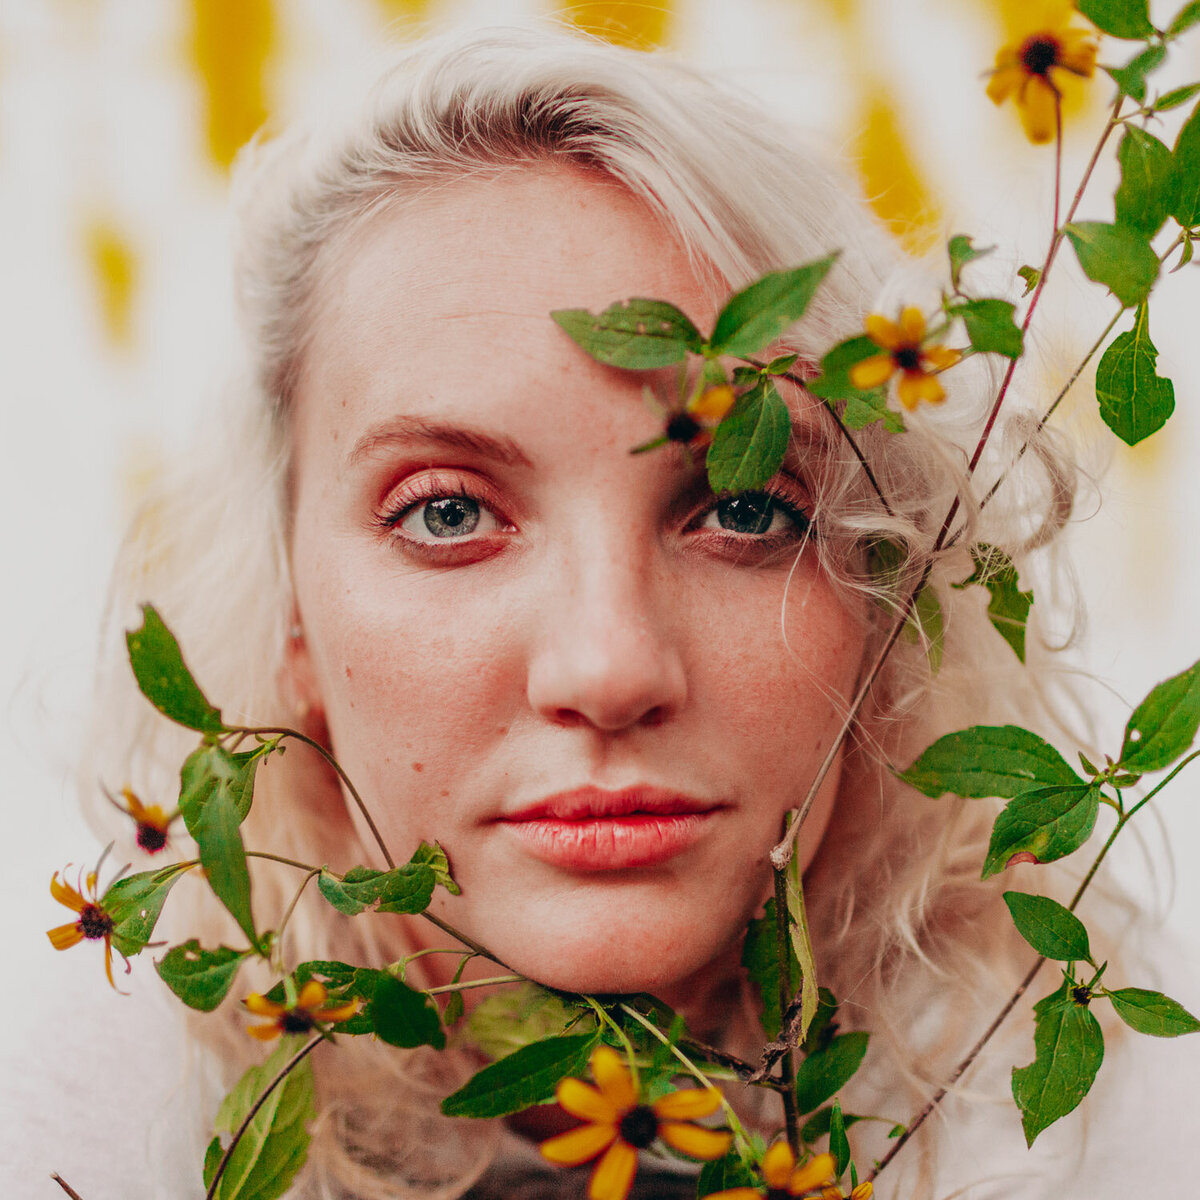 nashville-portrait-photographer-daisy-yellow-flower